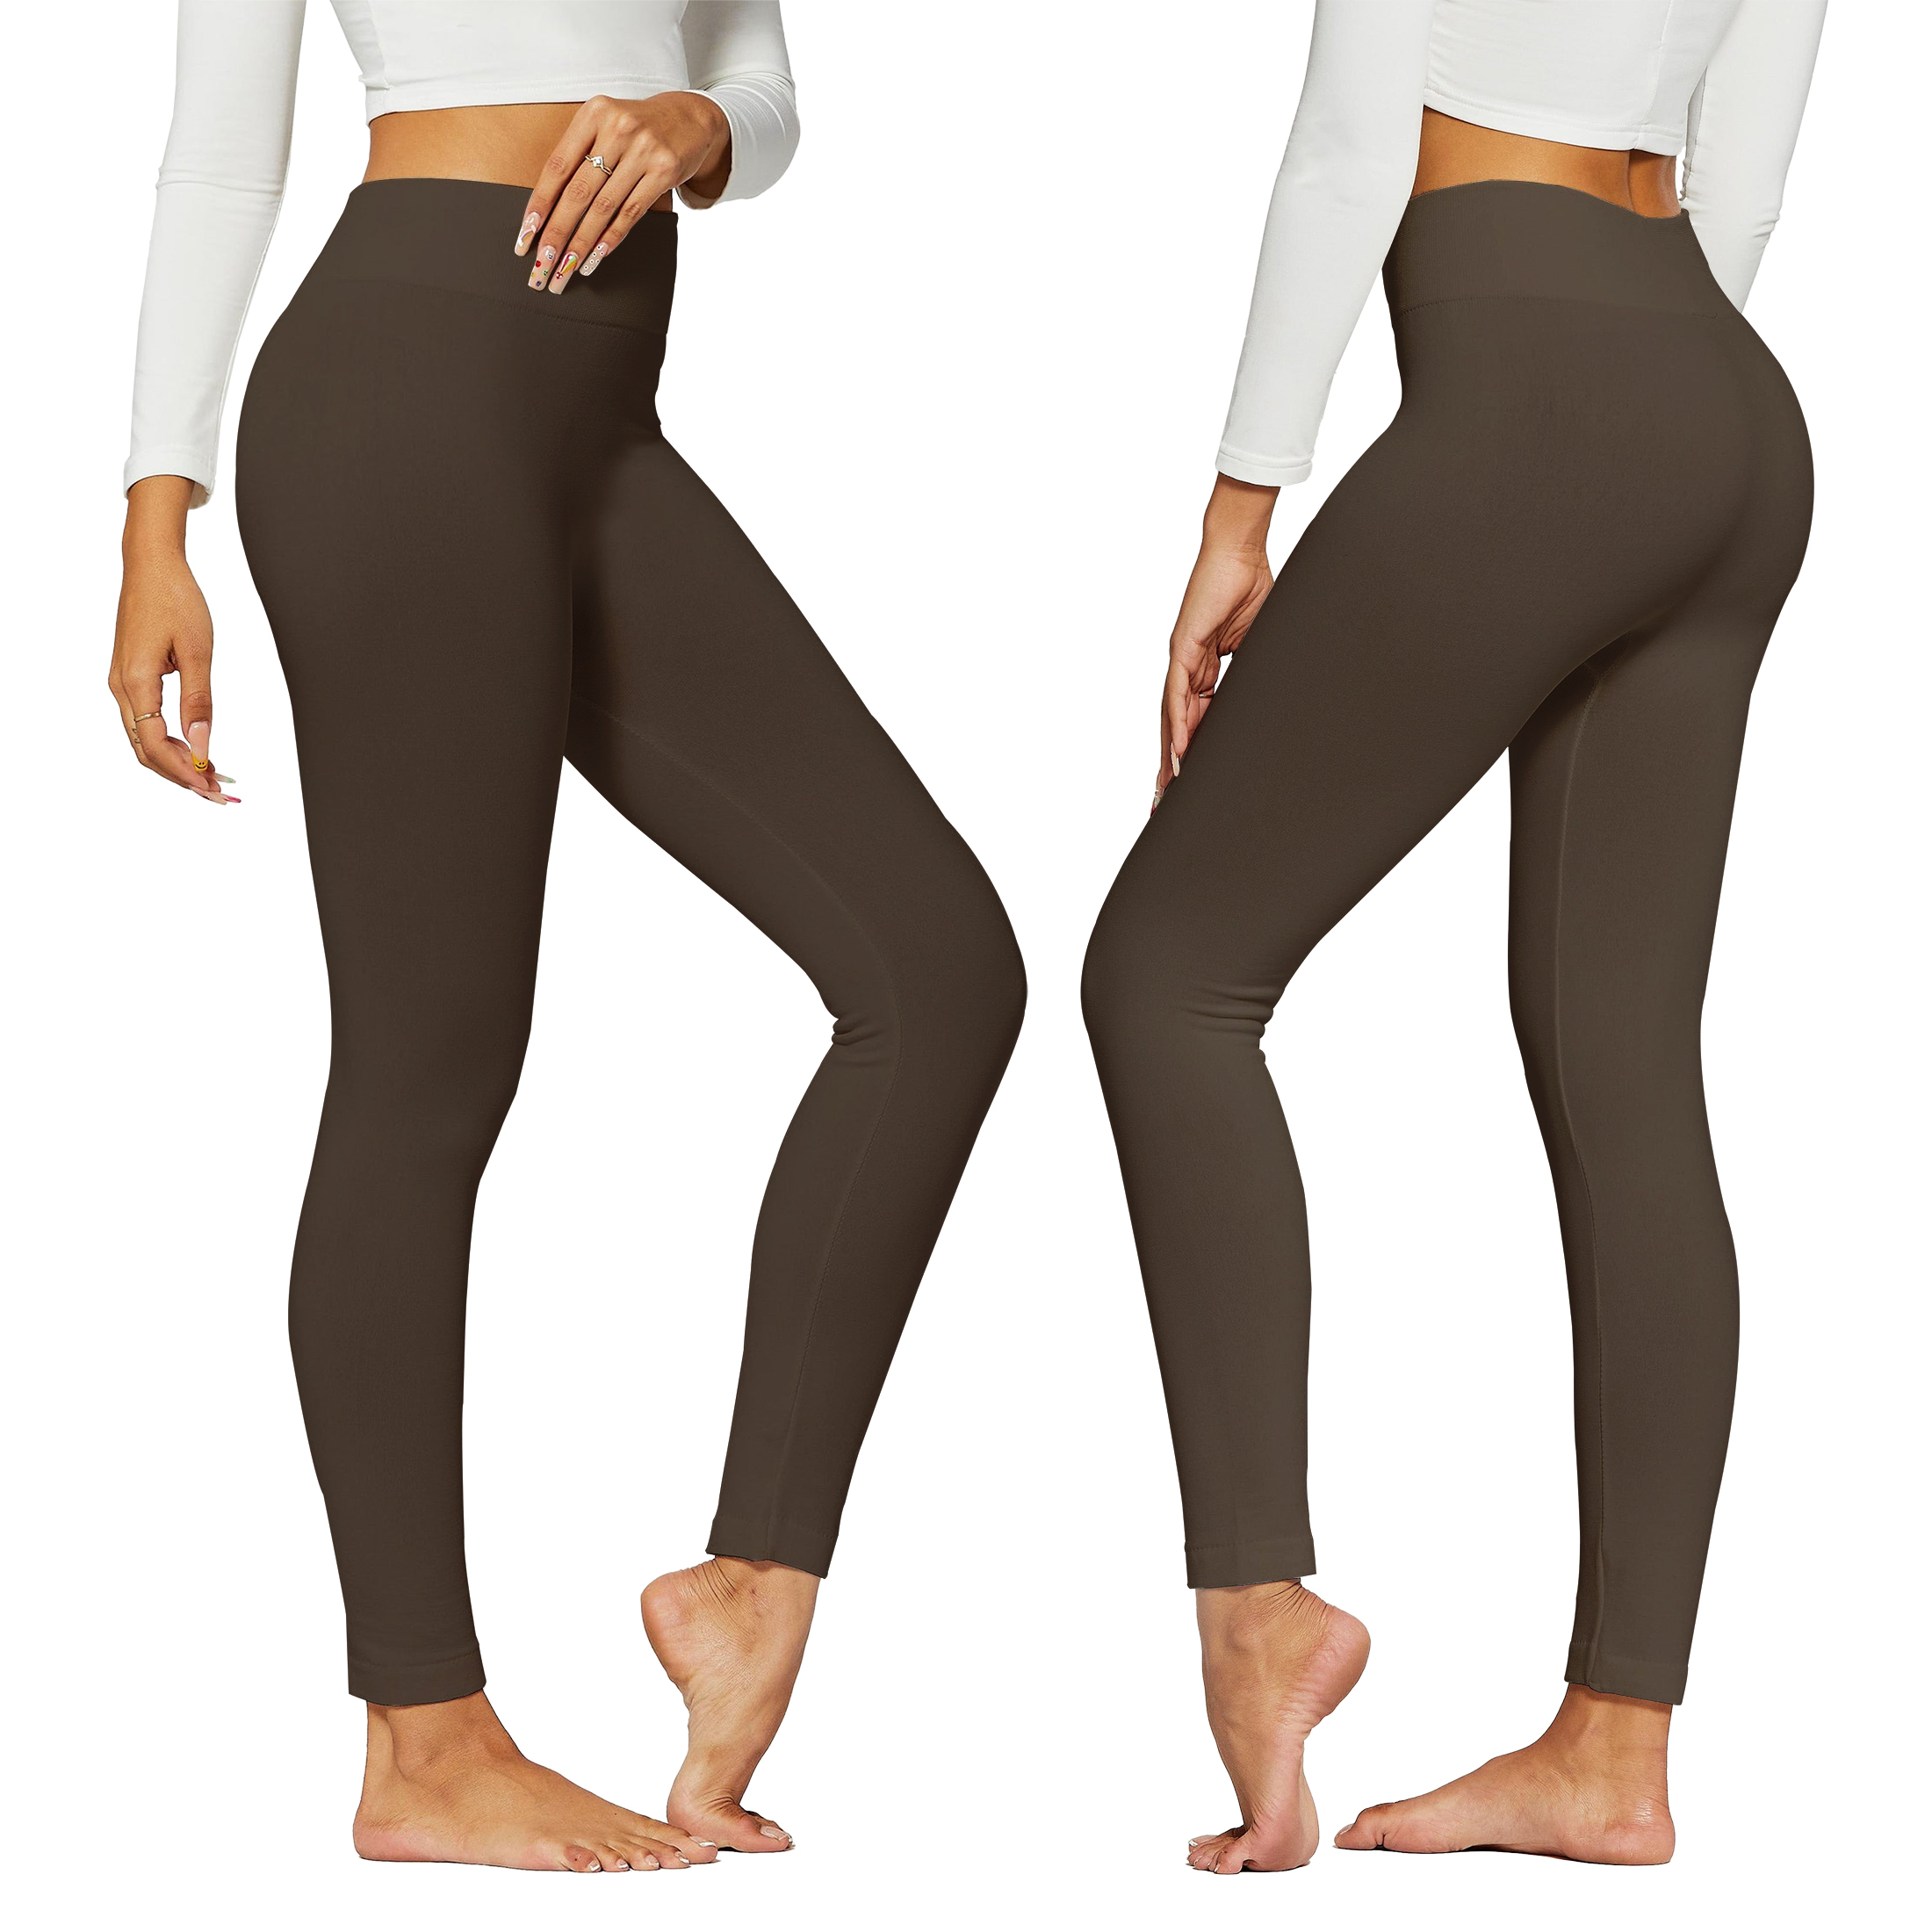 Women's Premium Quality High-Waist Fleece Lined Leggings (S-4X) - Brown, 1X/2X